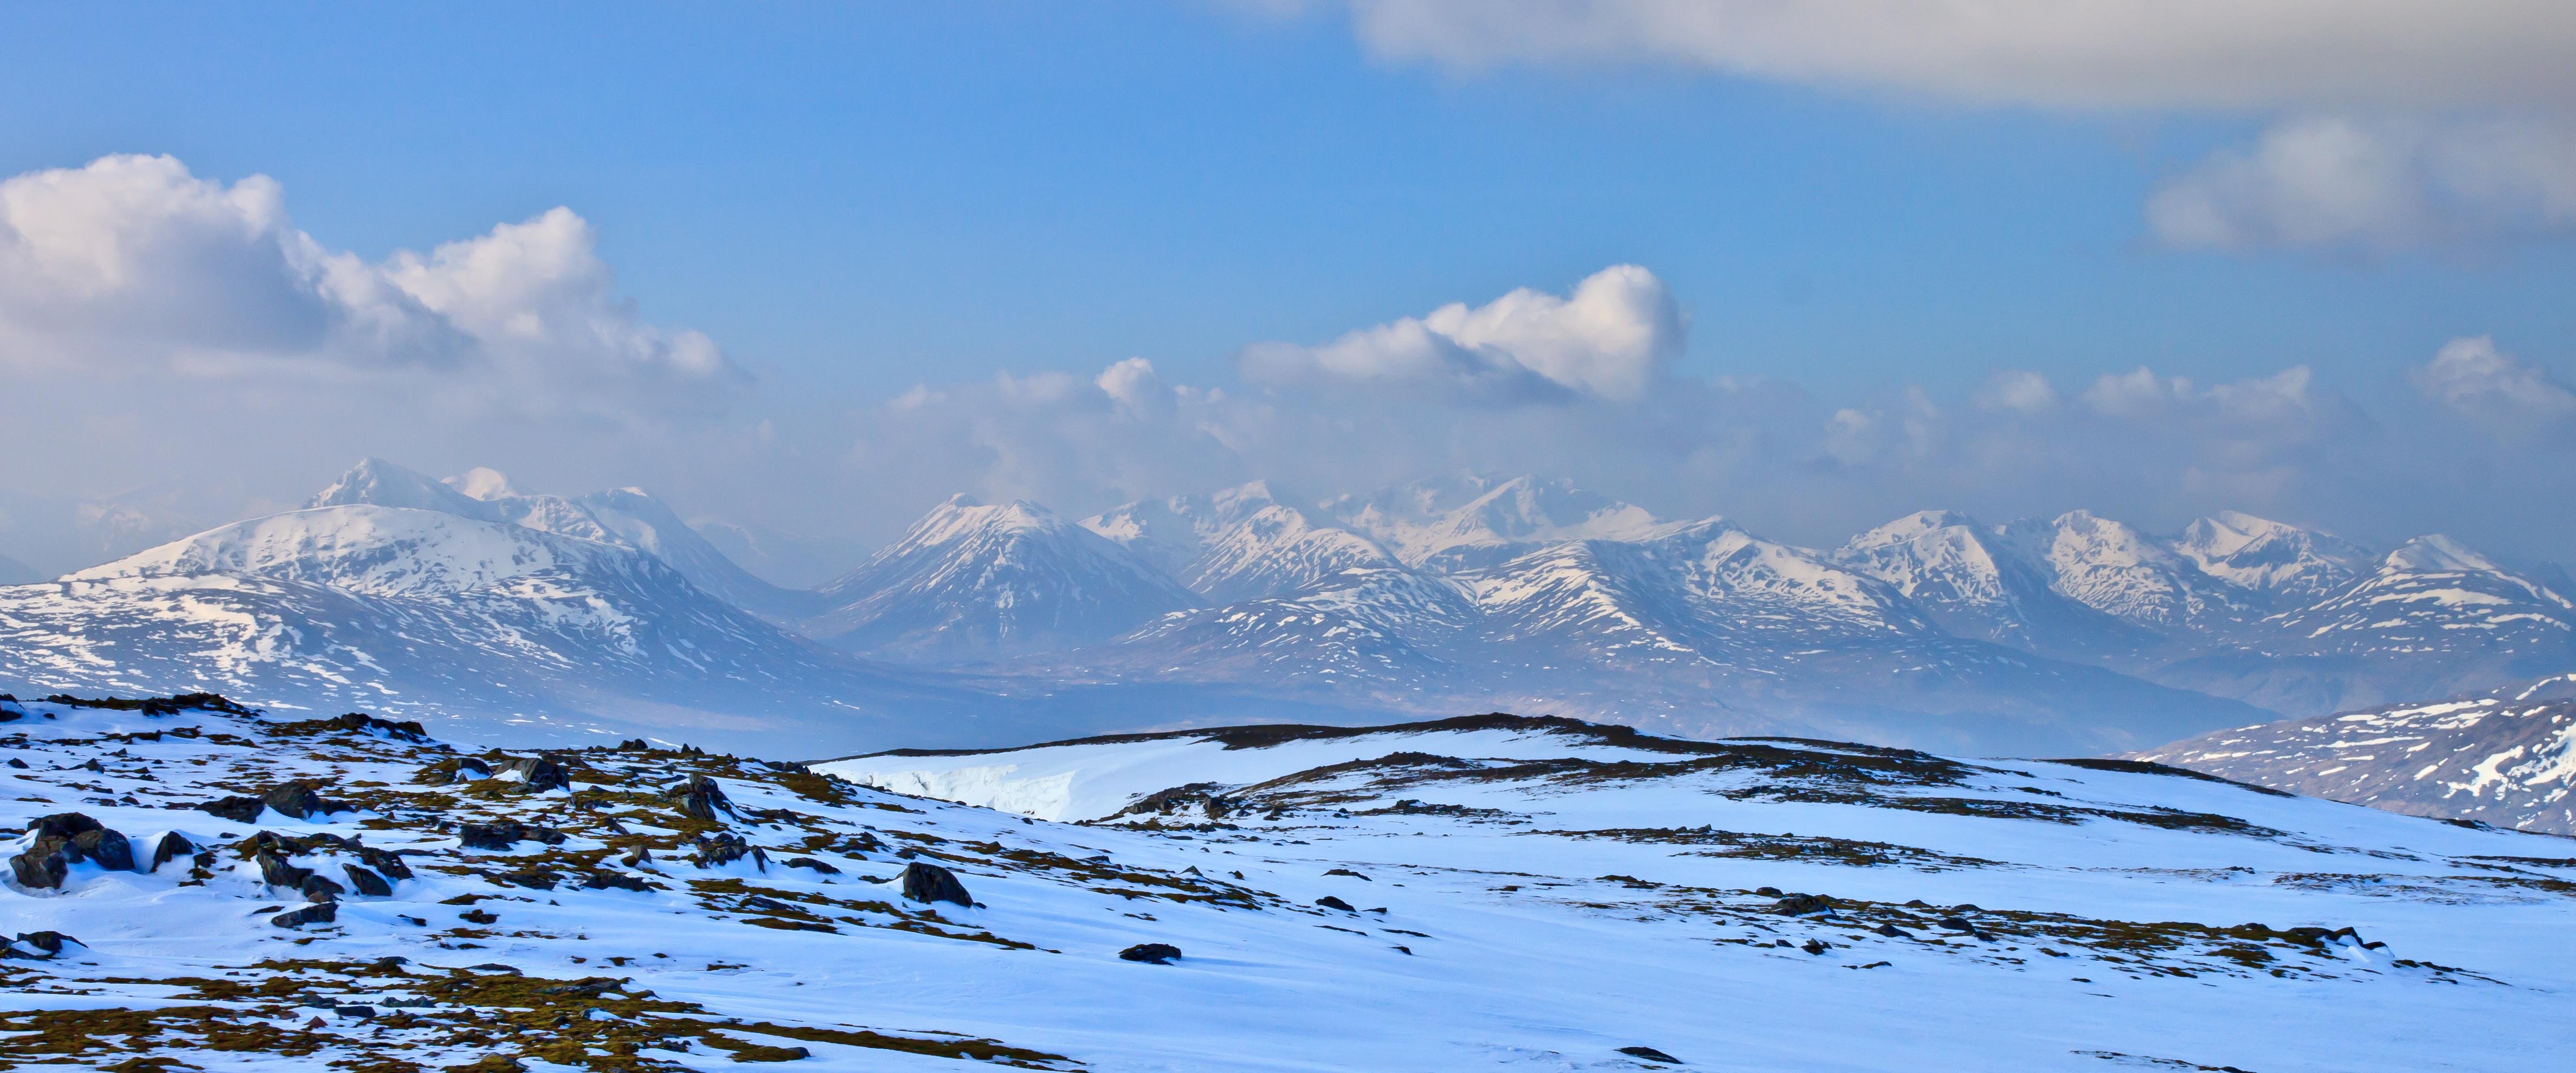 View south from summit Leum Uilleim towards The hills of Glencoe including Creise, Glen Etive, Bidean nam Bian.  March 2015.